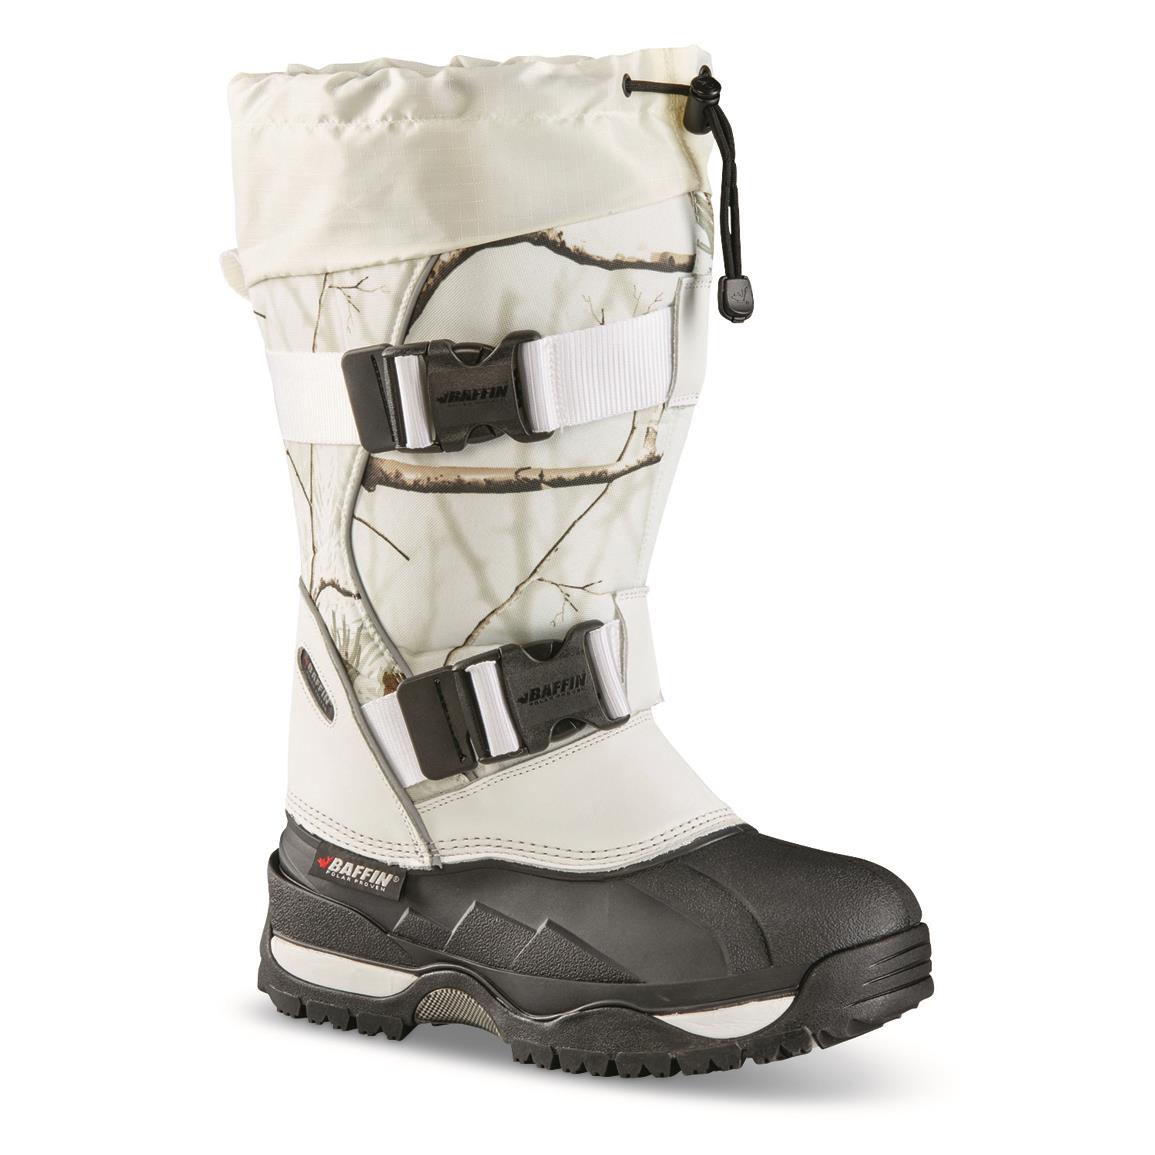 Baffin Men's Impact Polar Waterproof Insulated Boots, Snow Camo